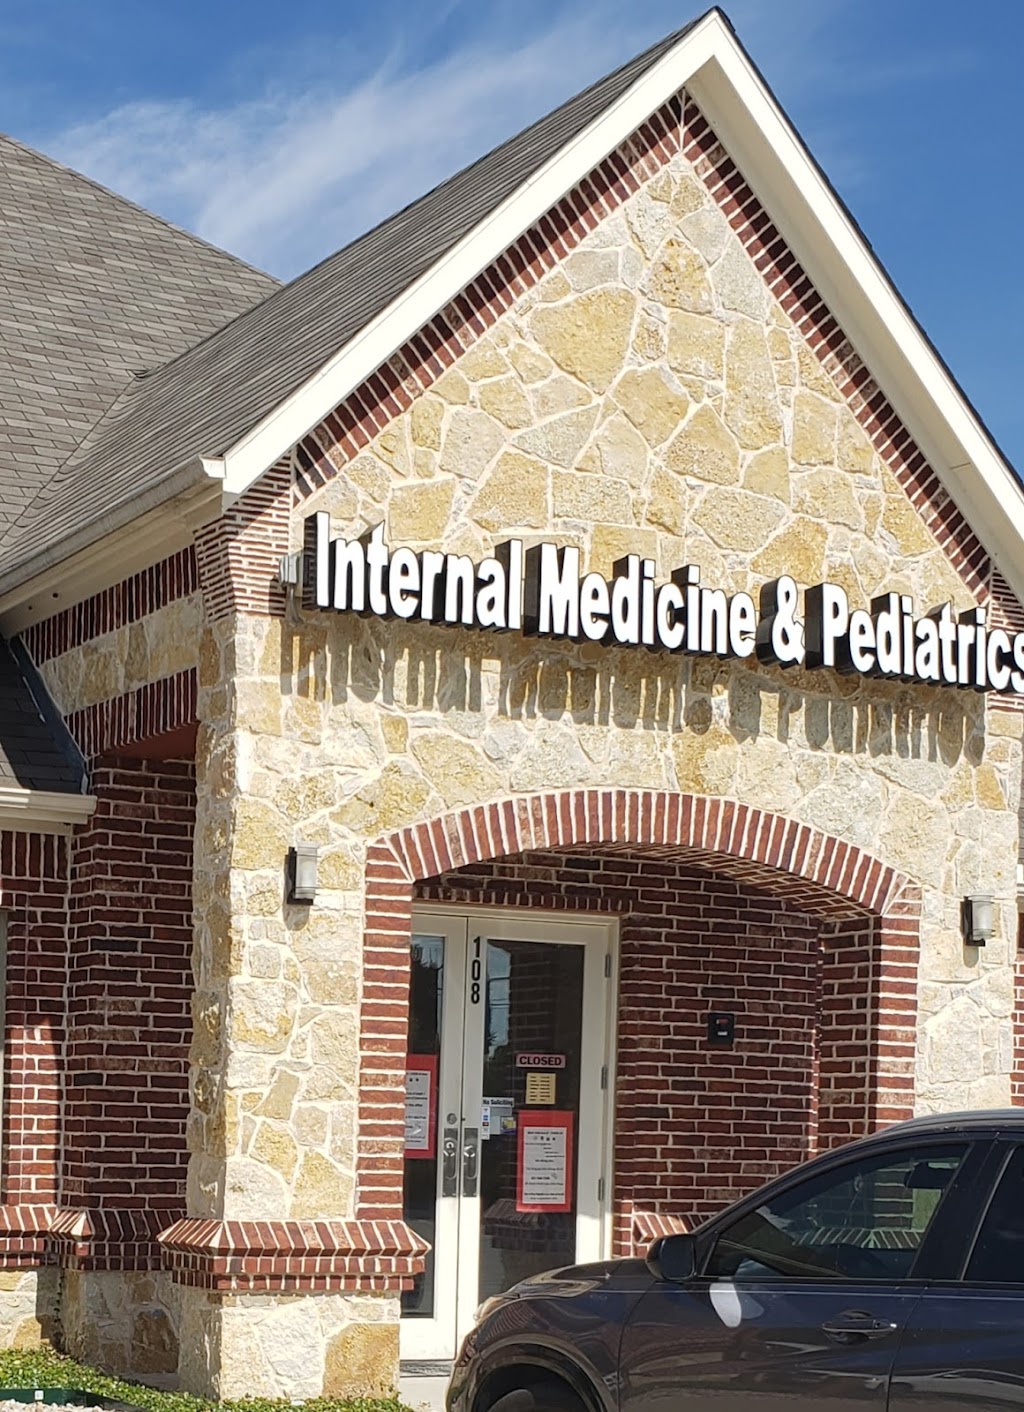 Tarrant Internal Medicine and Pediatrics, PLLC | 7520 N Beach St #108, Fort Worth, TX 76137 | Phone: (817) 984-7100